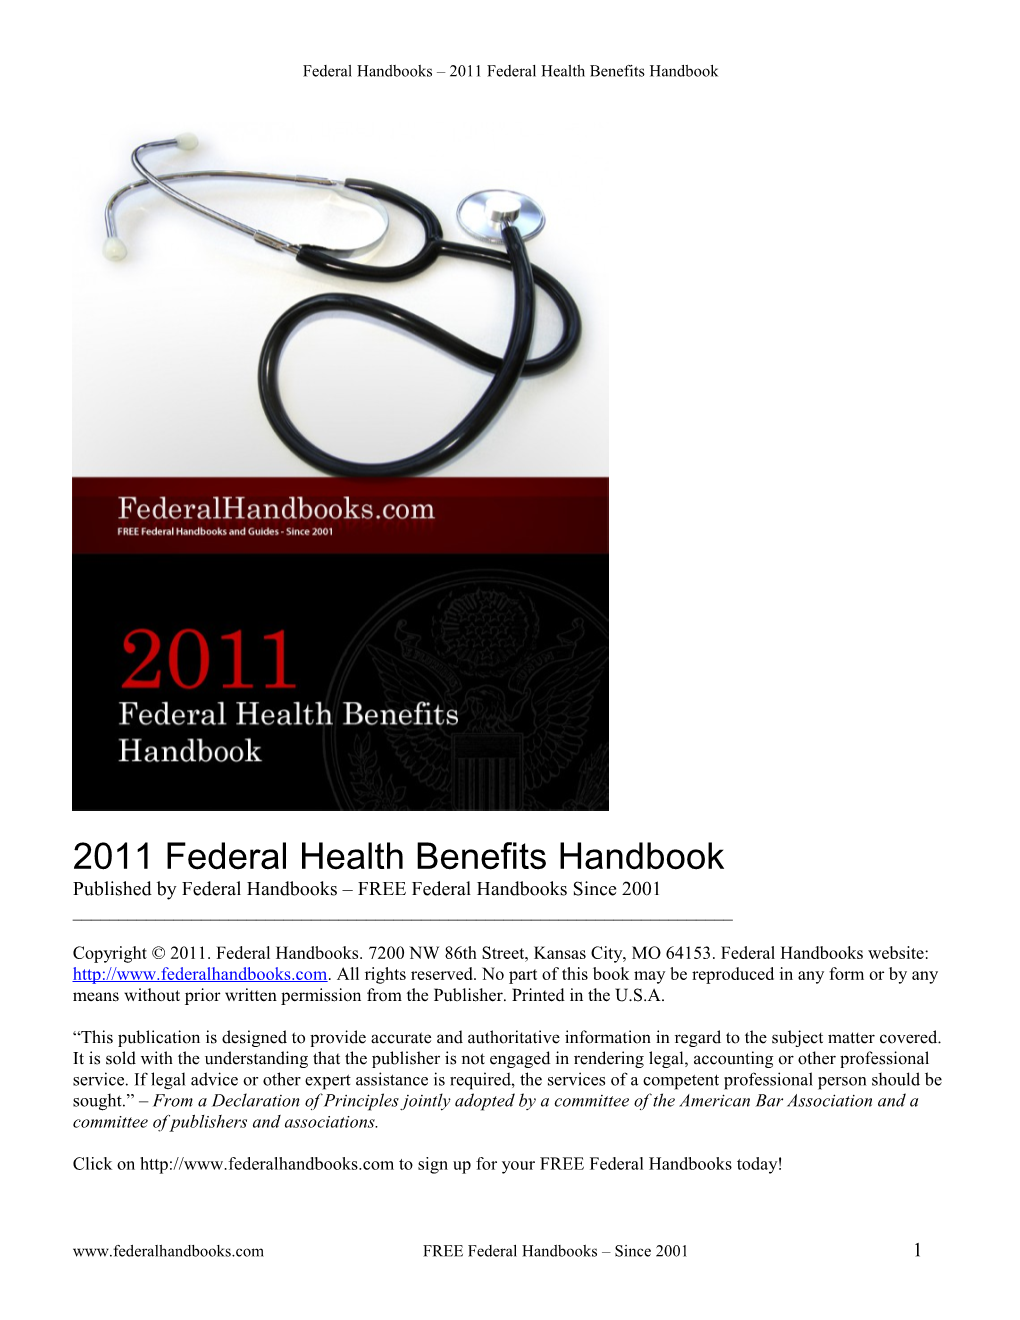 Federal Handbooks 2011 Federal Health Benefits Handbook